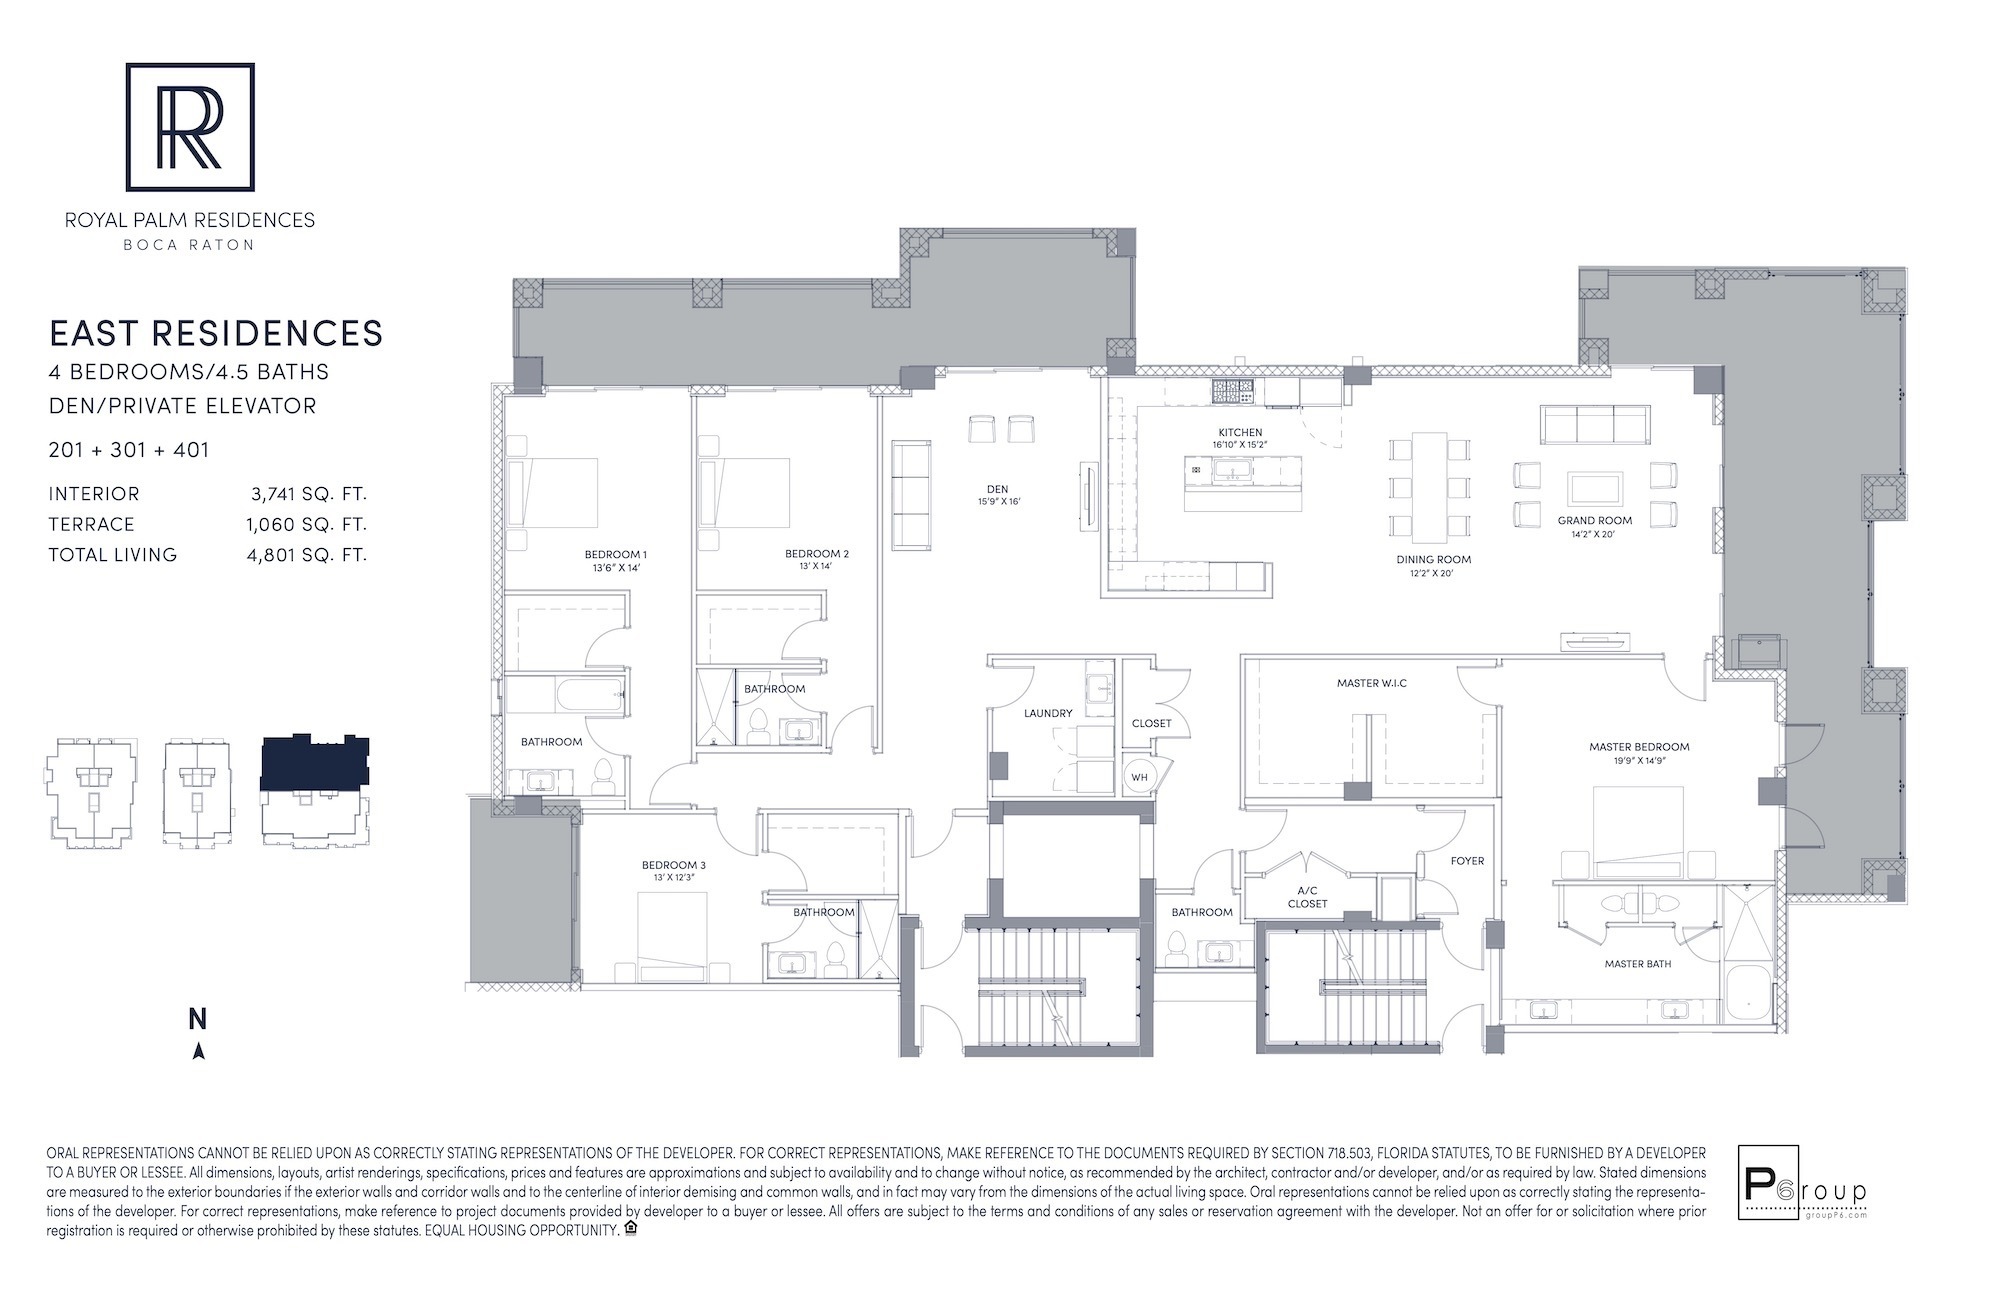 Floor Plan for Royal Palm Residences Floorplans, East Residences 201 + 301 + 401